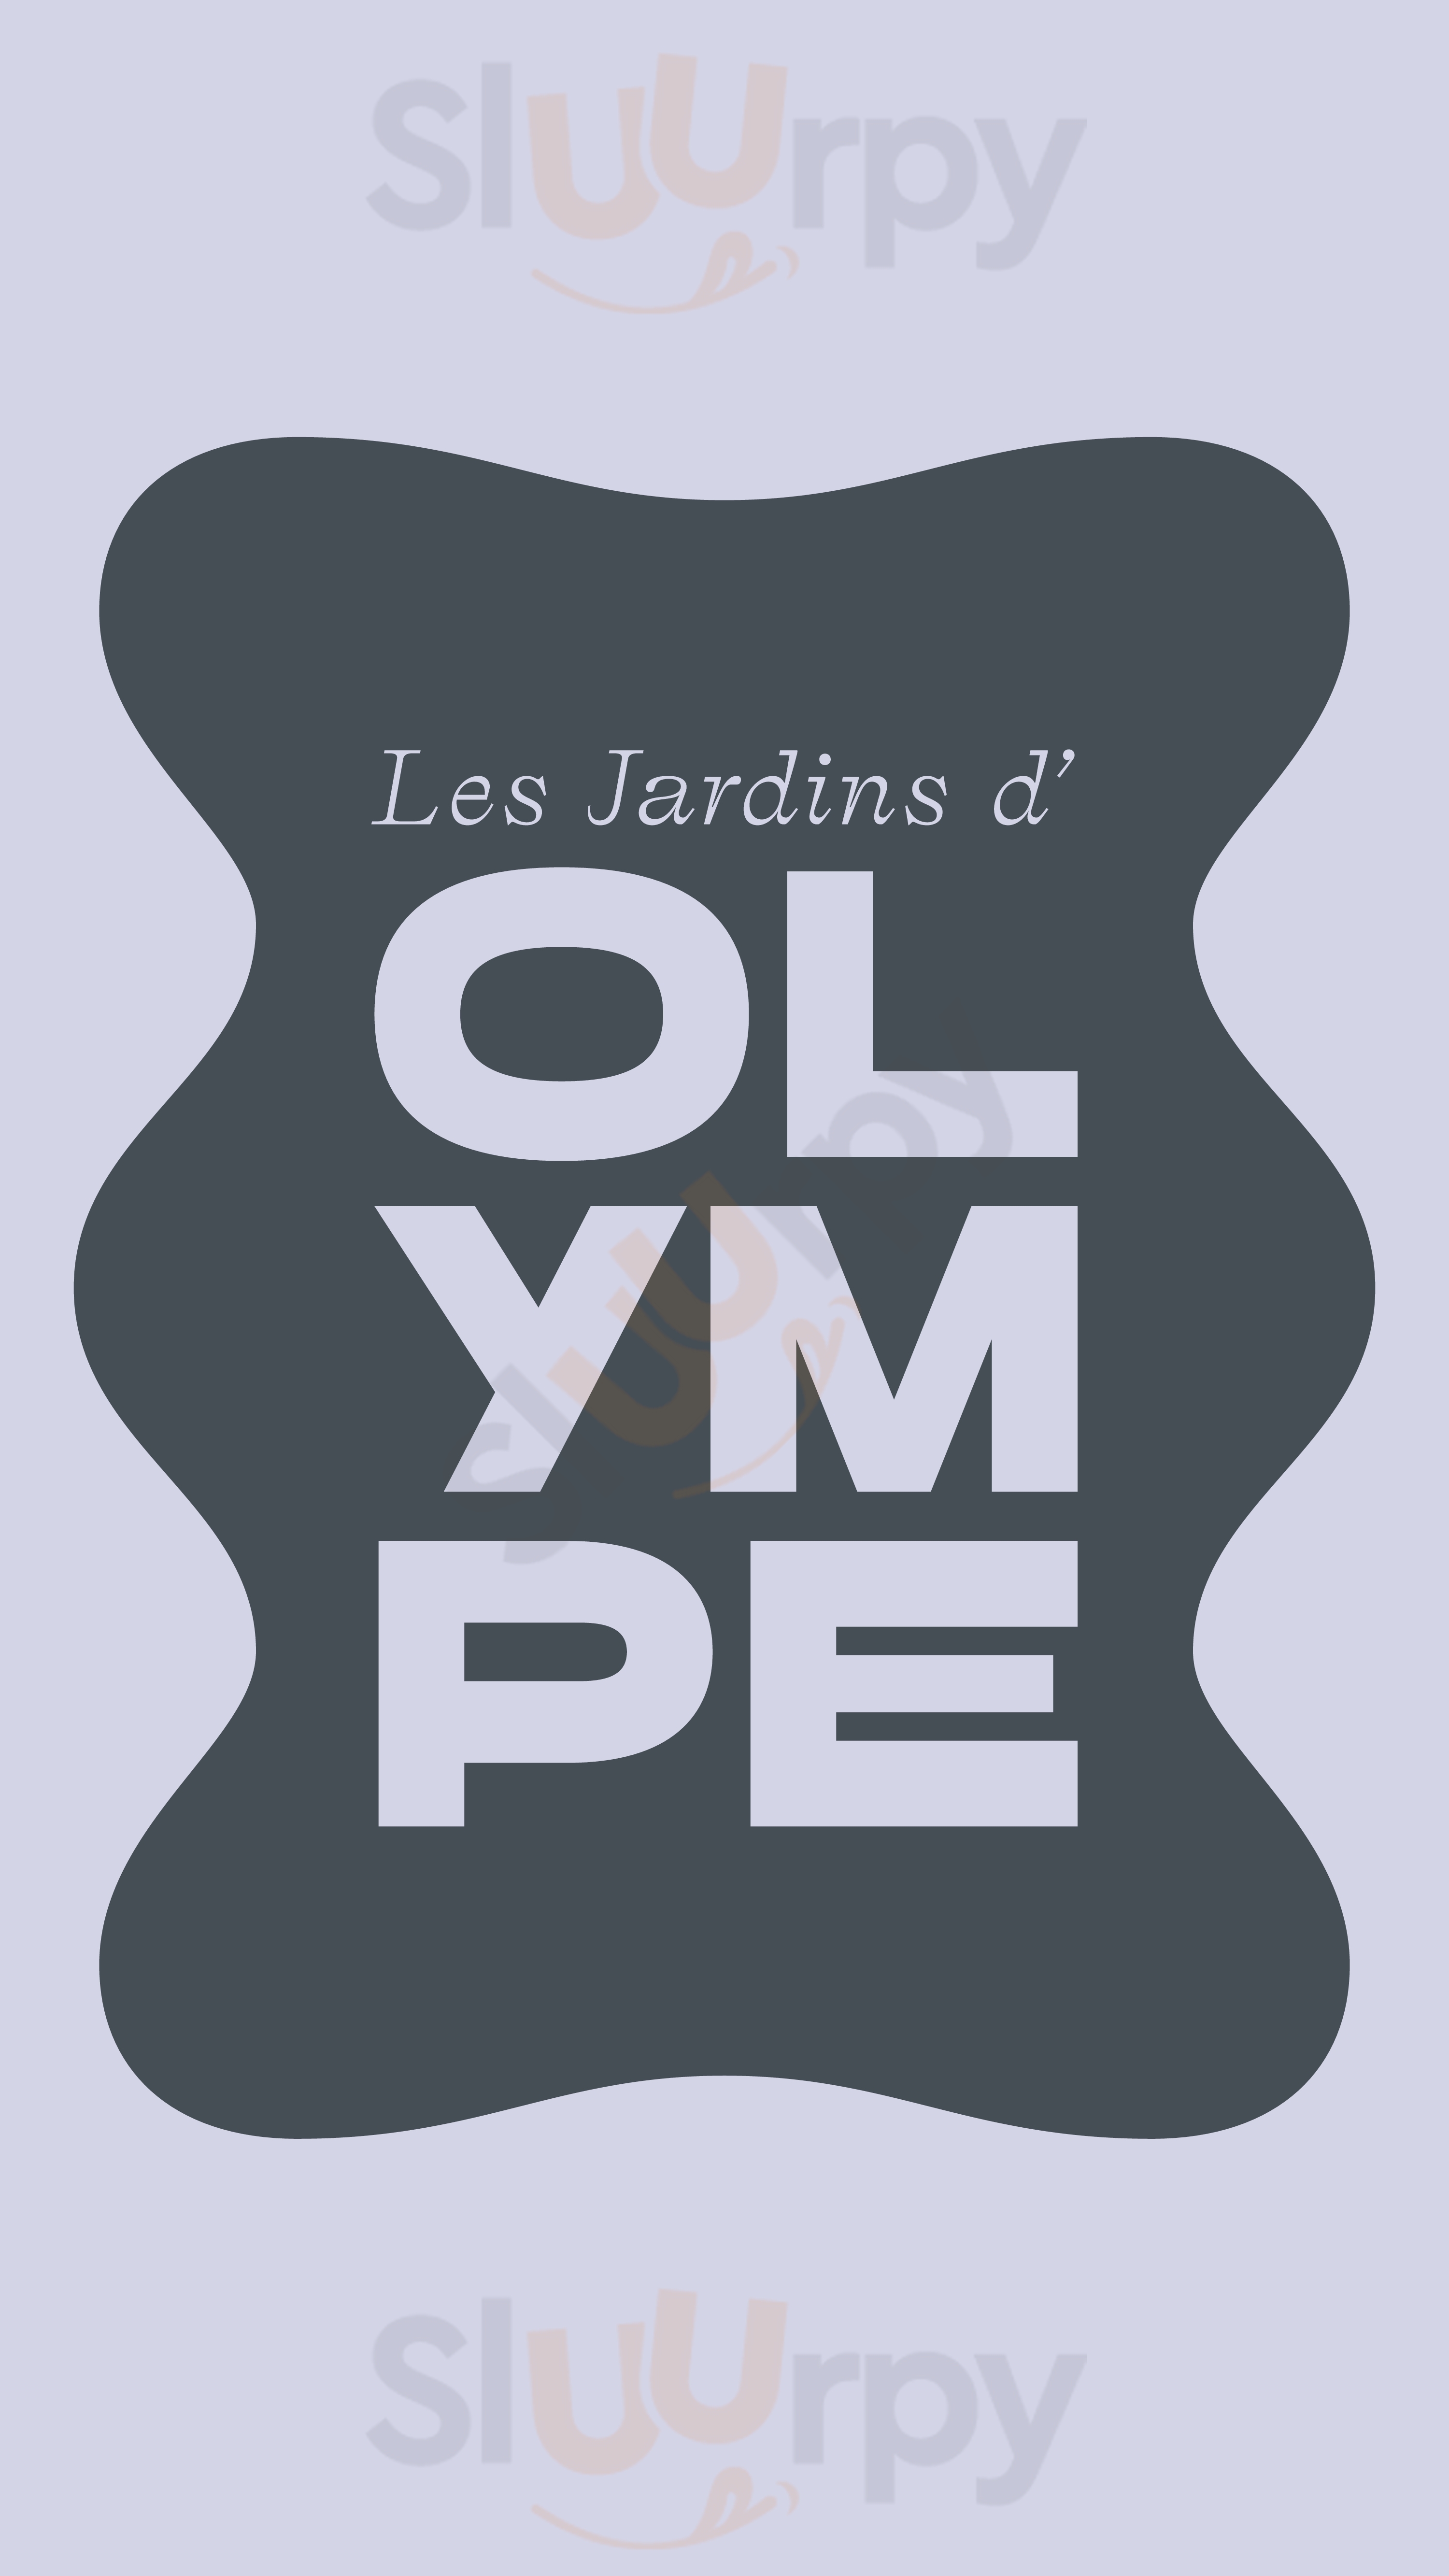 Les Jardins D'olympe Paris Menu - 1